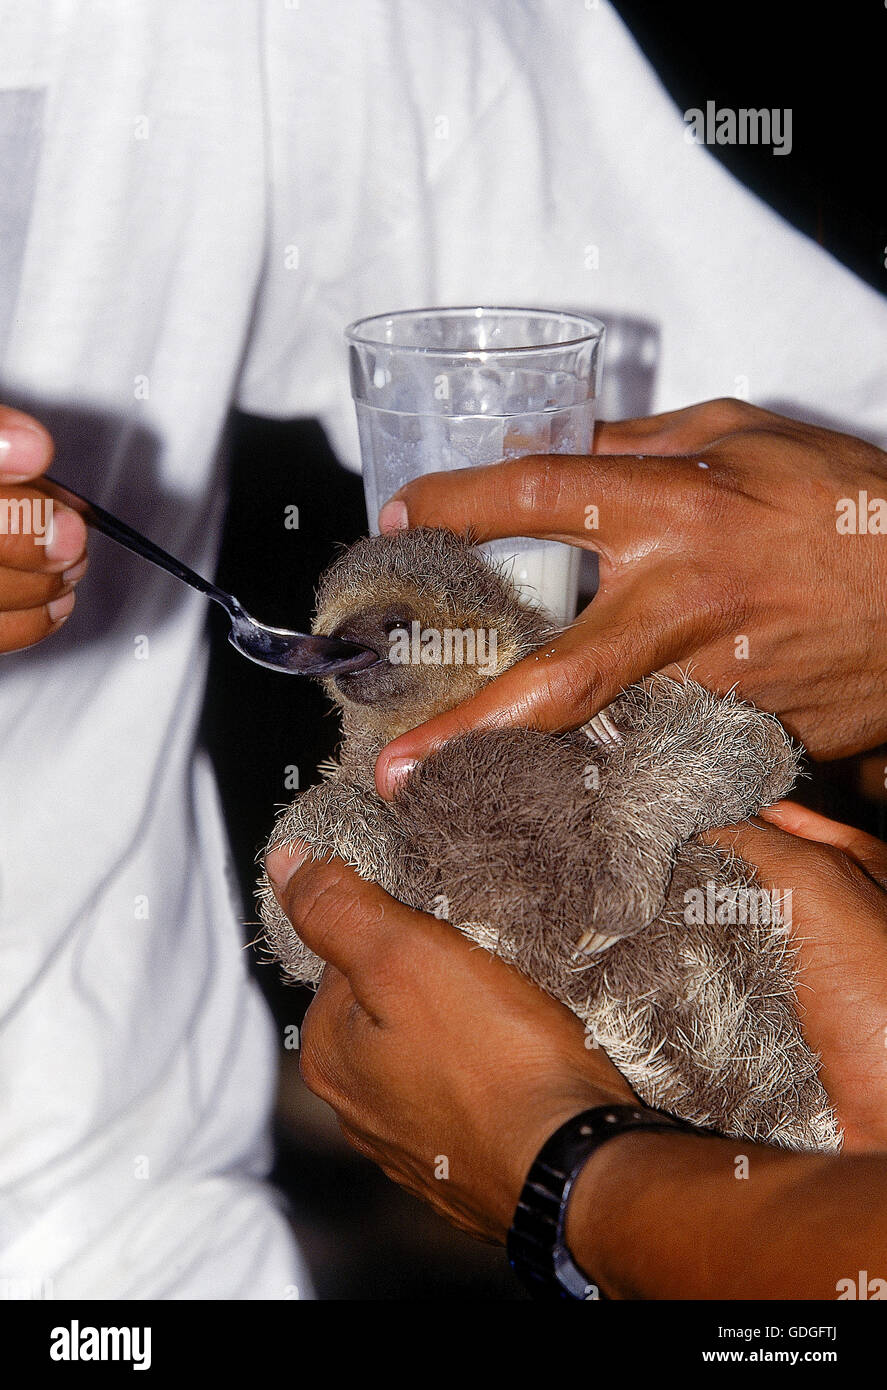 Maned Three Toed Sloth, bradypus torquatus, Vet giving Food to Baby, Pantanal in Brazil Stock Photo